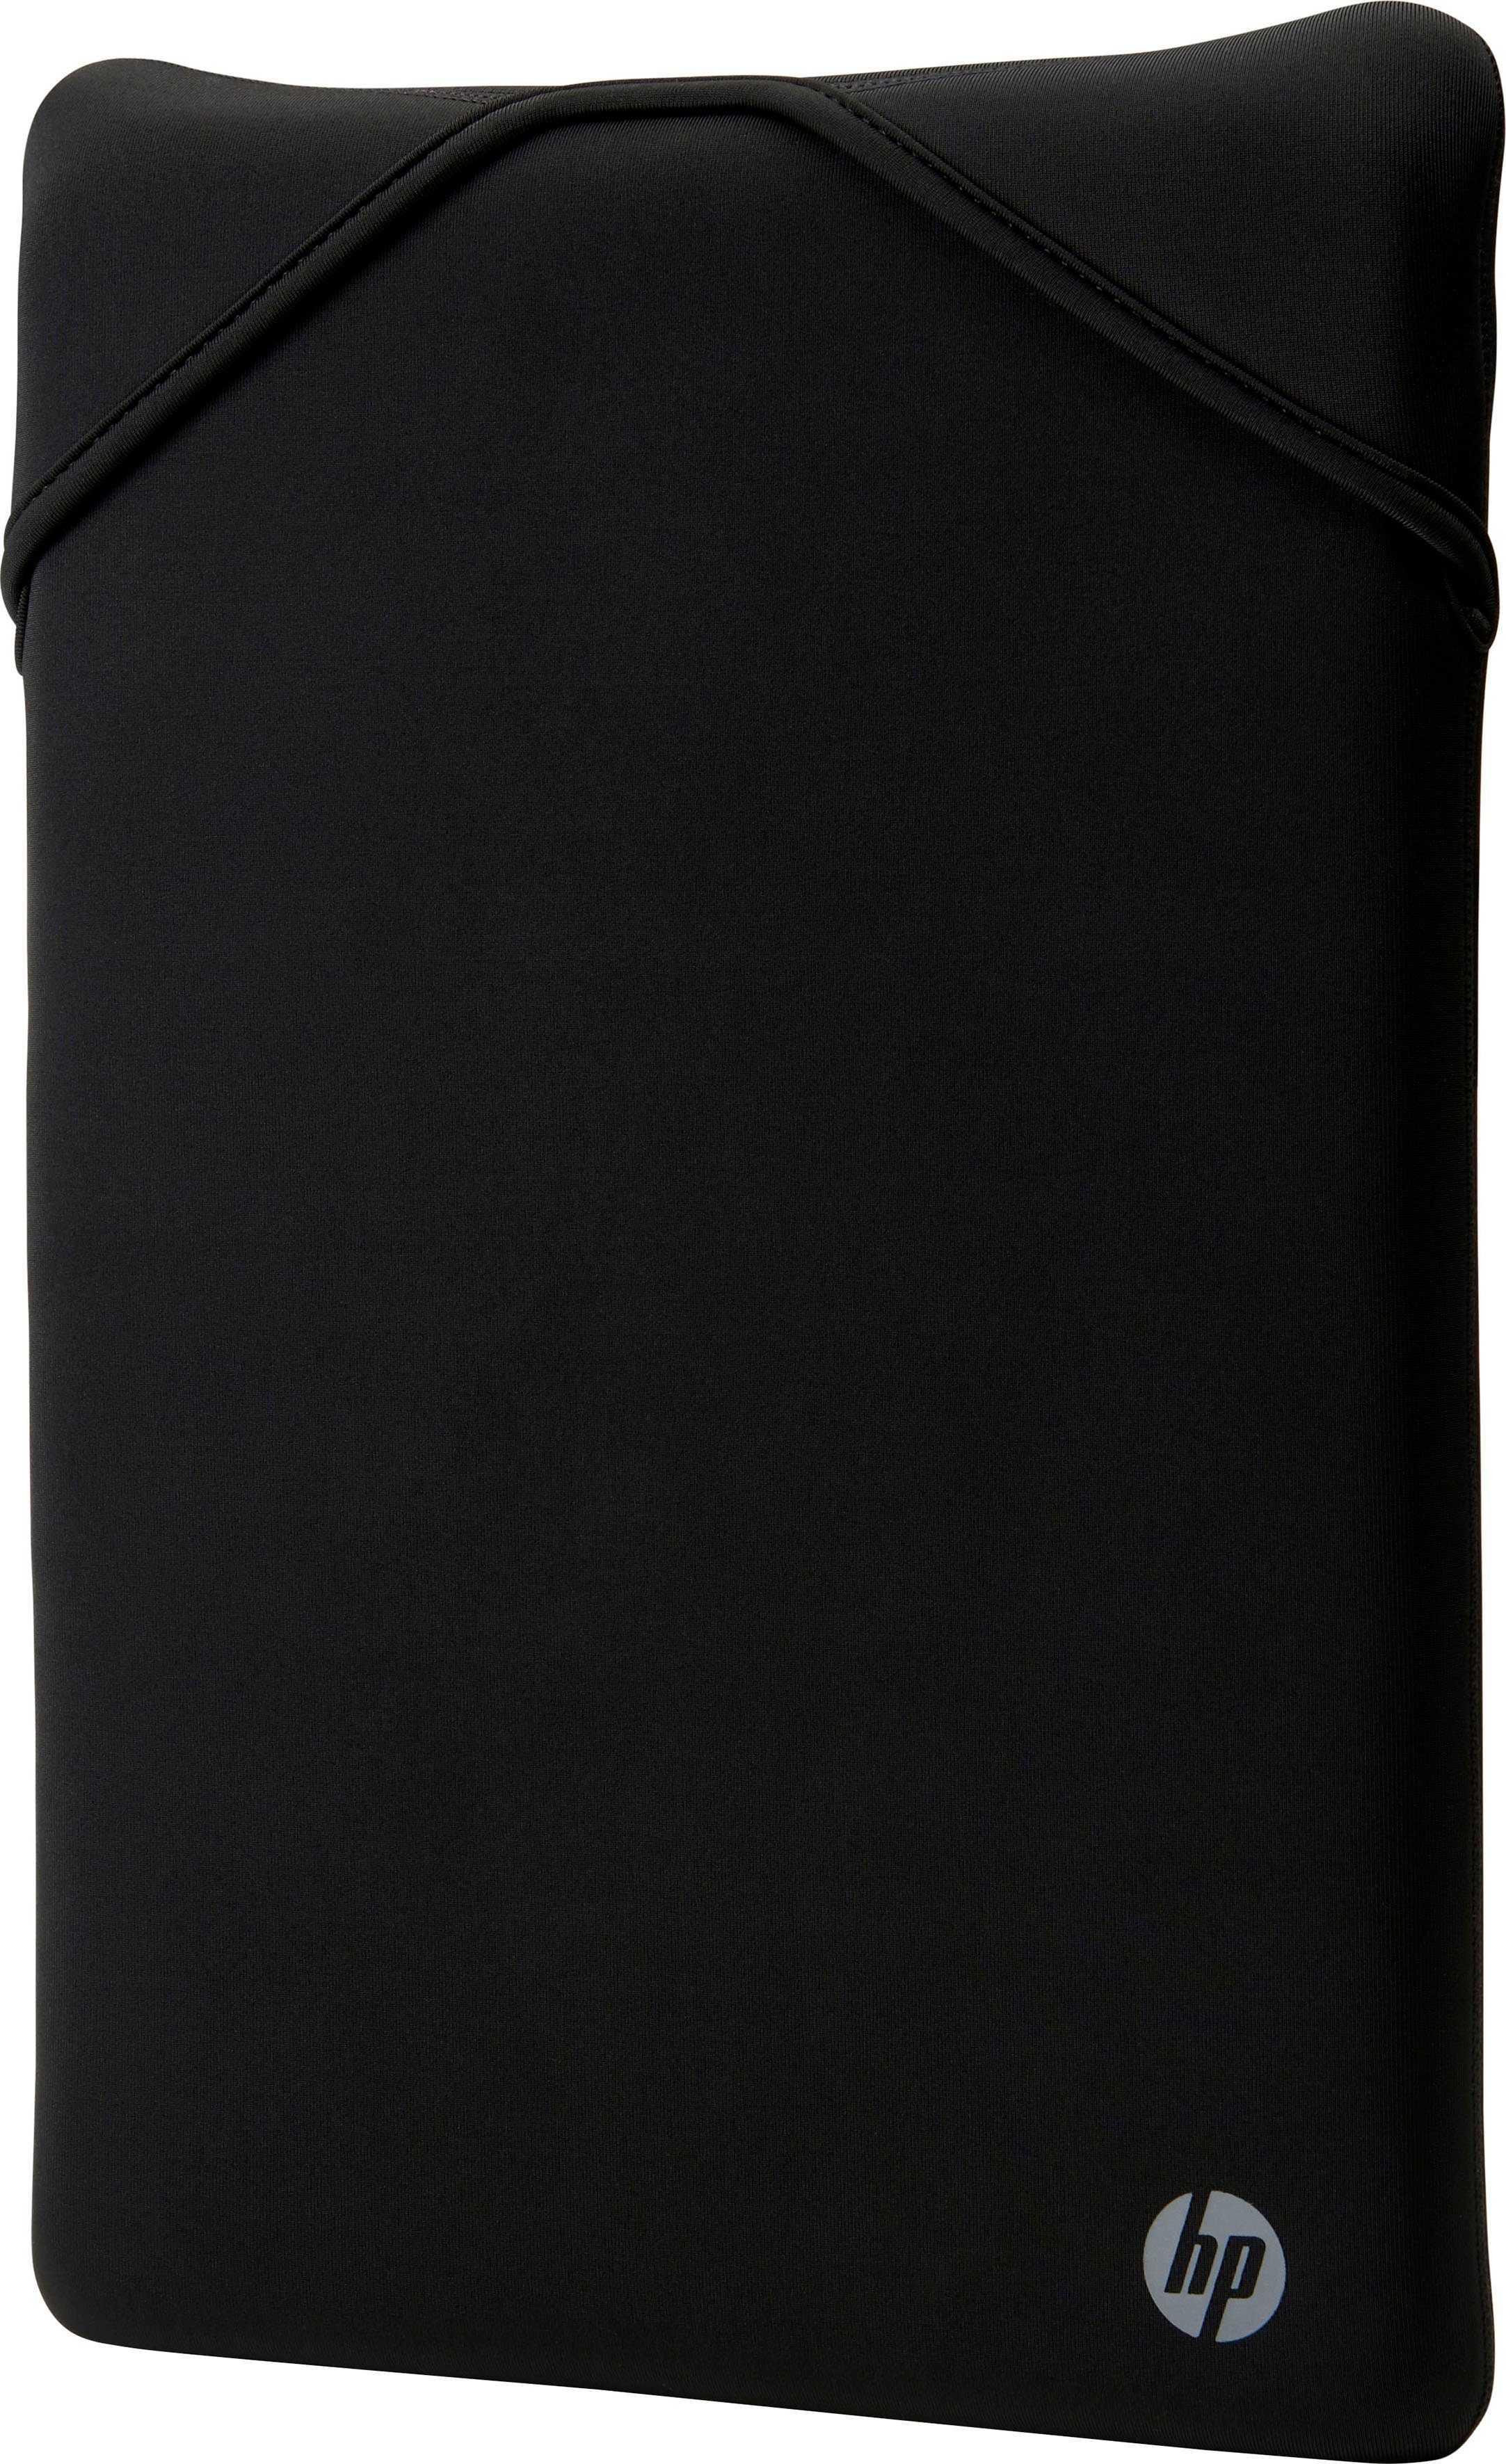 schwarz-grau 35,6cm Blk/Geo HP Reversible (P) 14Zoll Protective Laptoptasche Sleeve